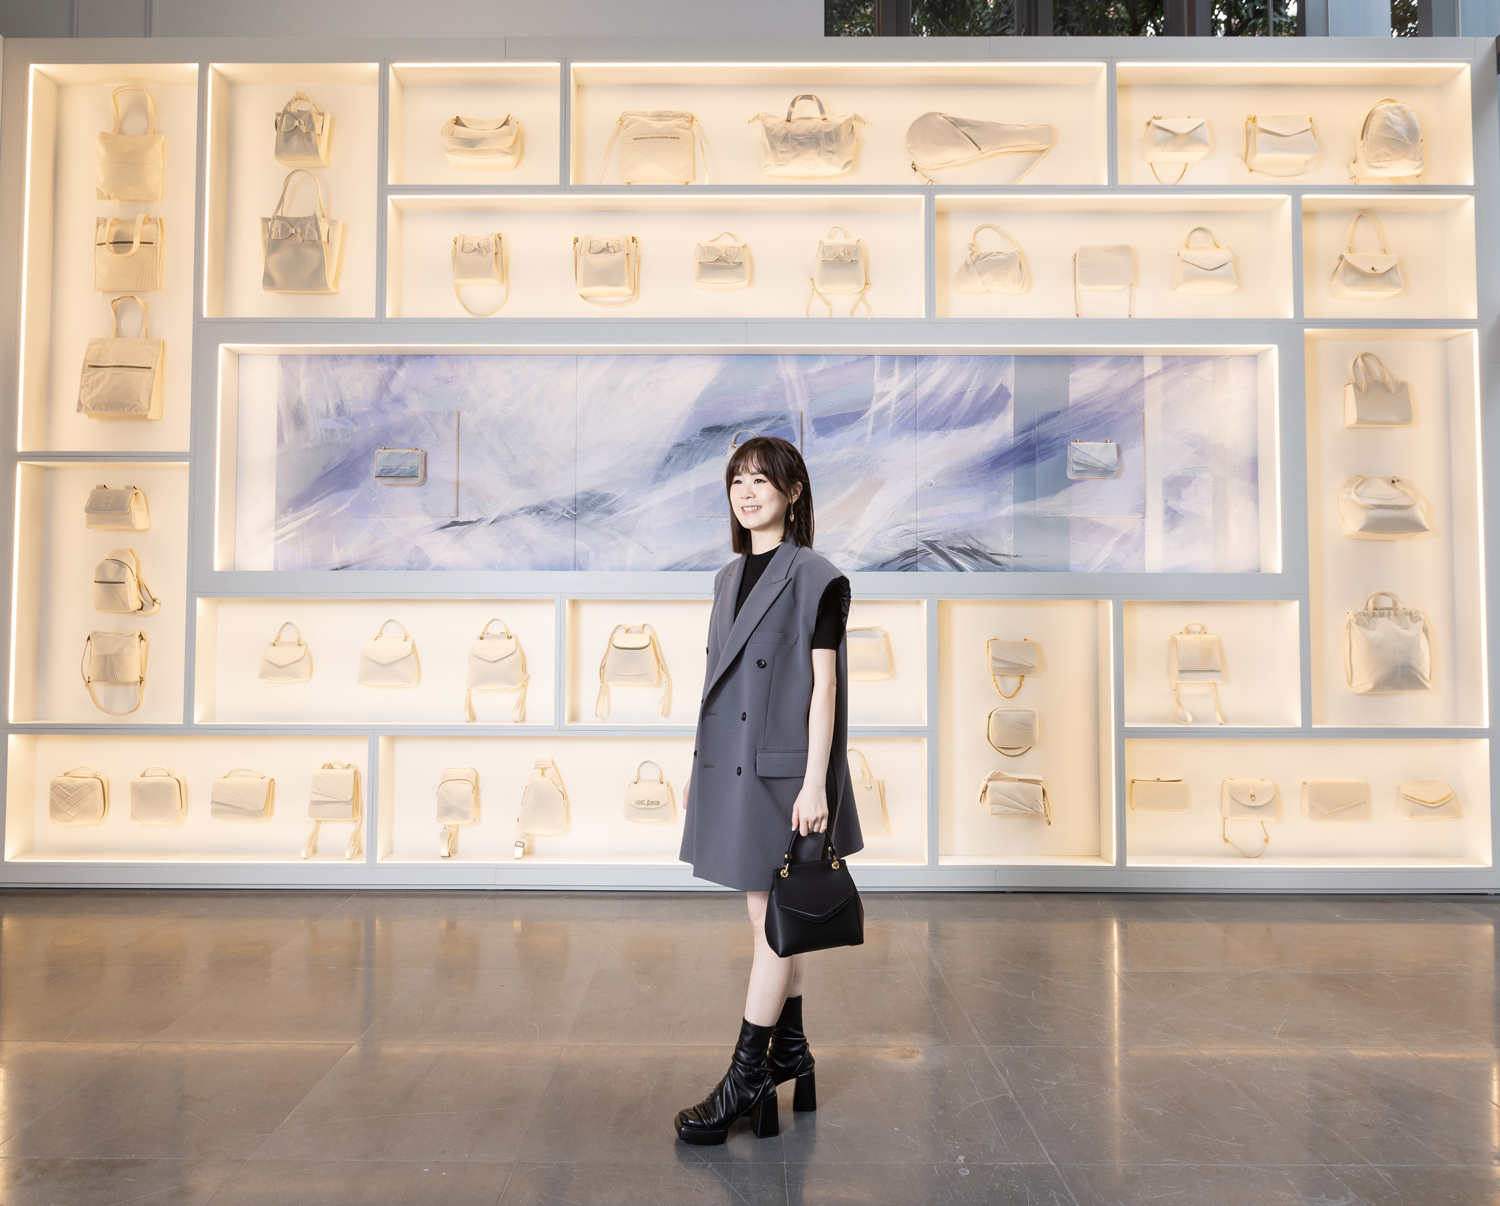 Designer Grace Han Joins ASIAN ART IN LONDON Exhibition